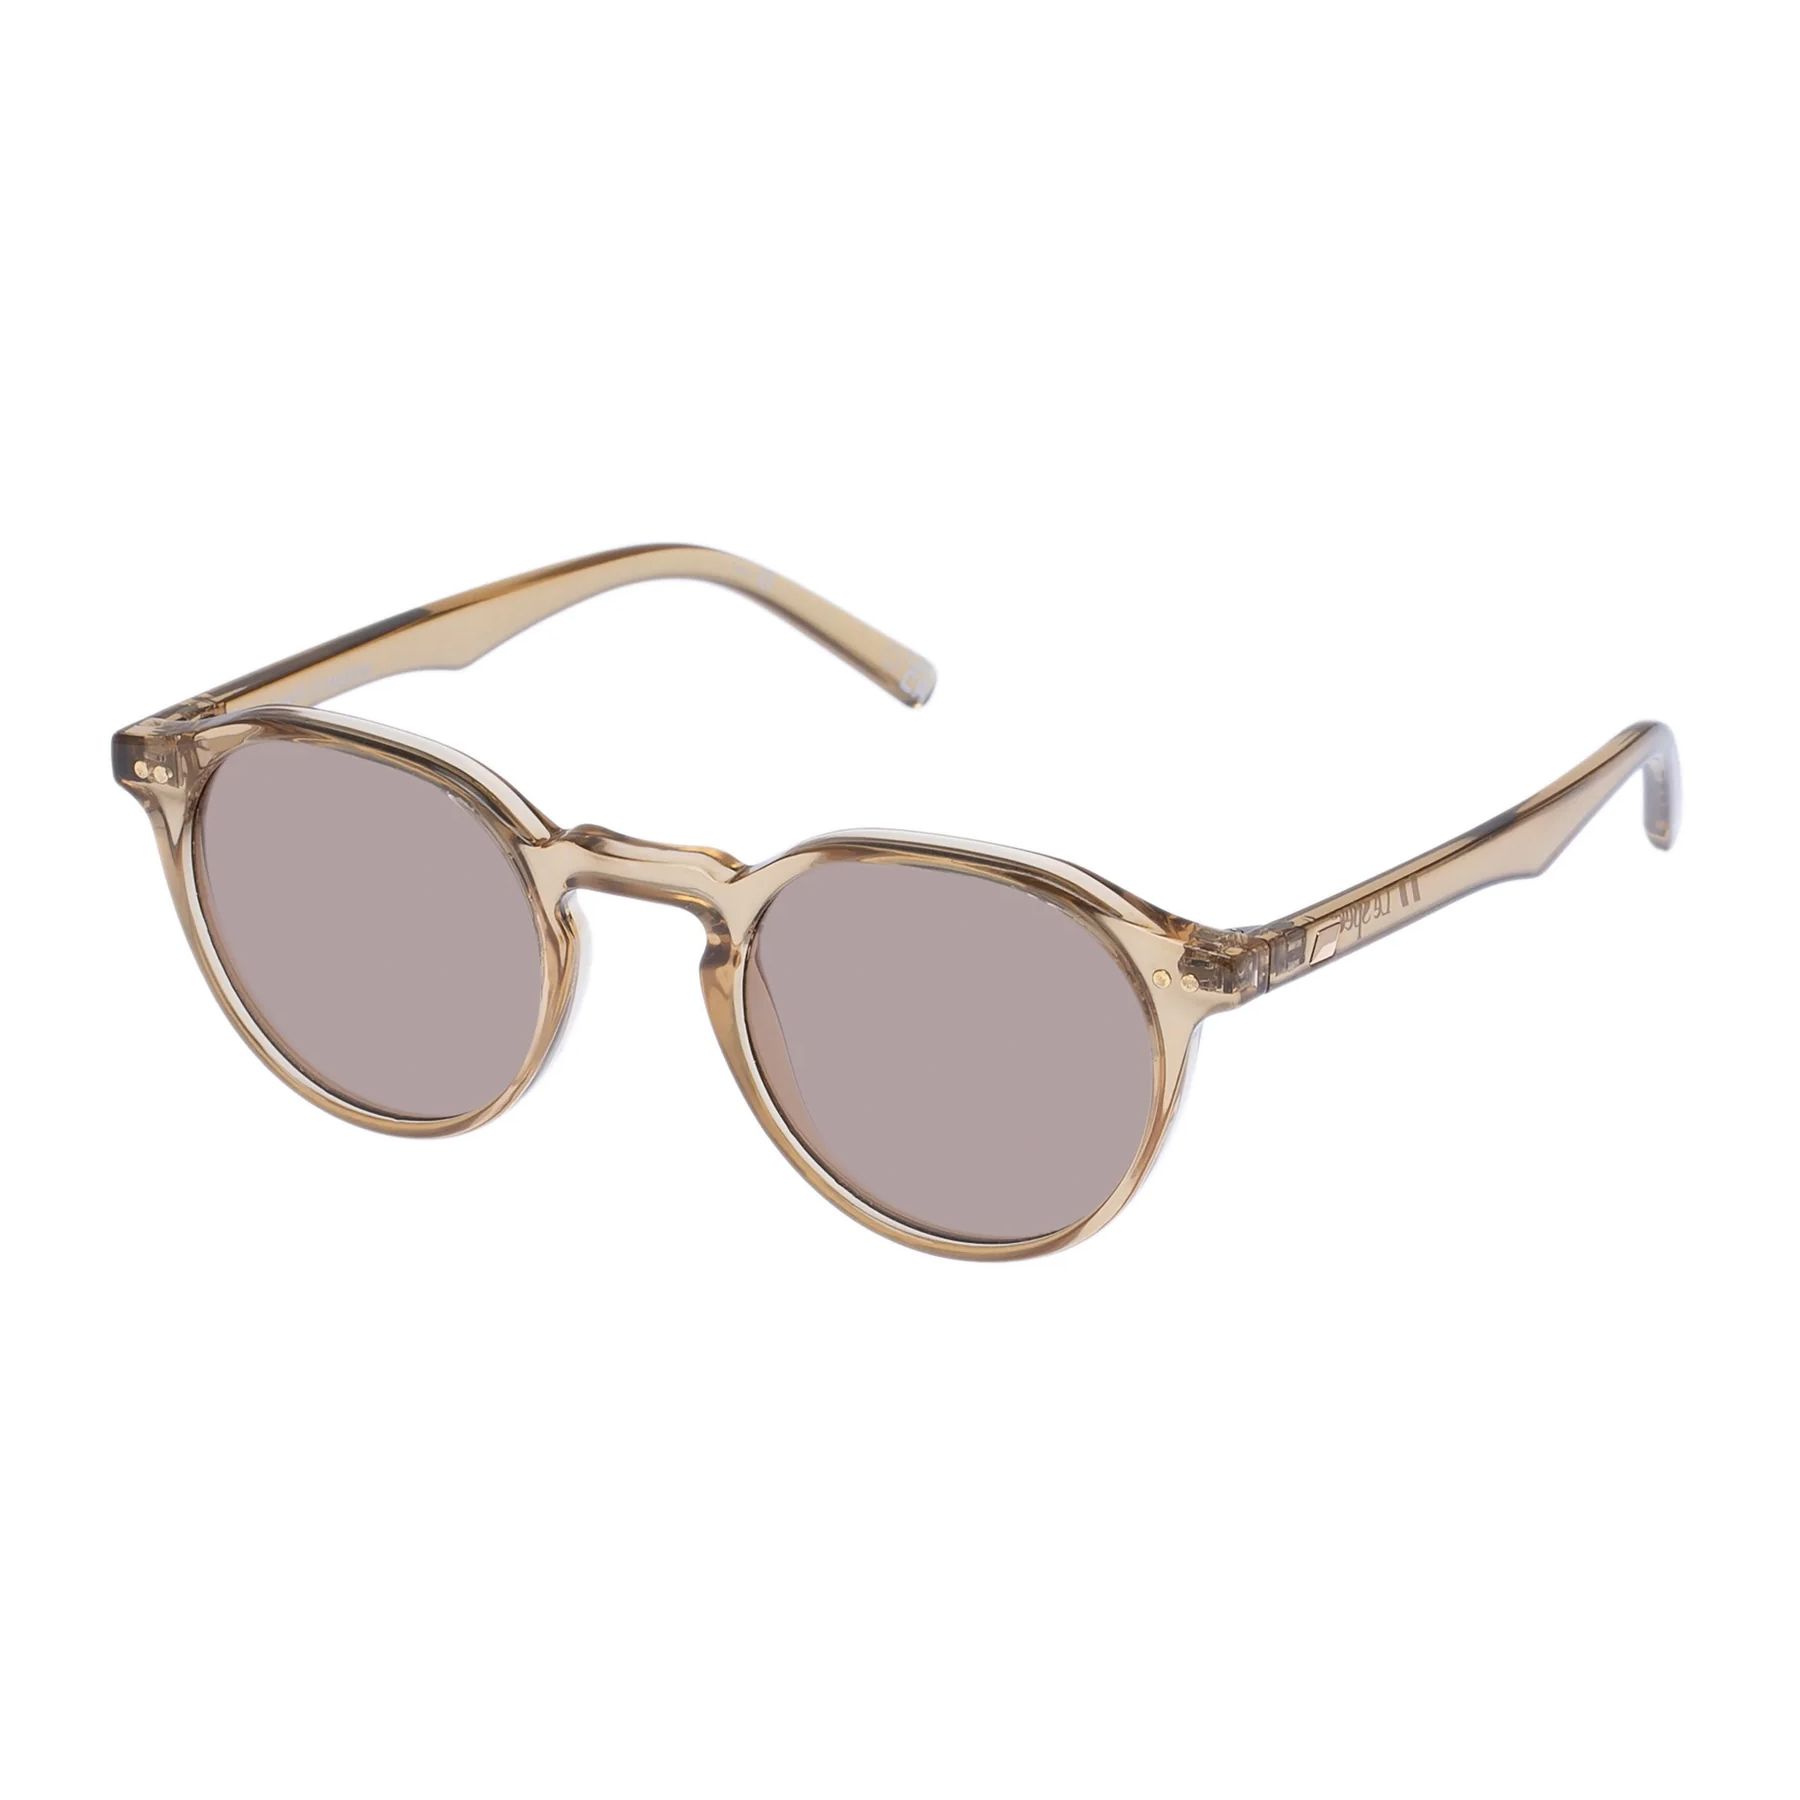 GALAVANT Round Sunglasses WHISKEY - size 48